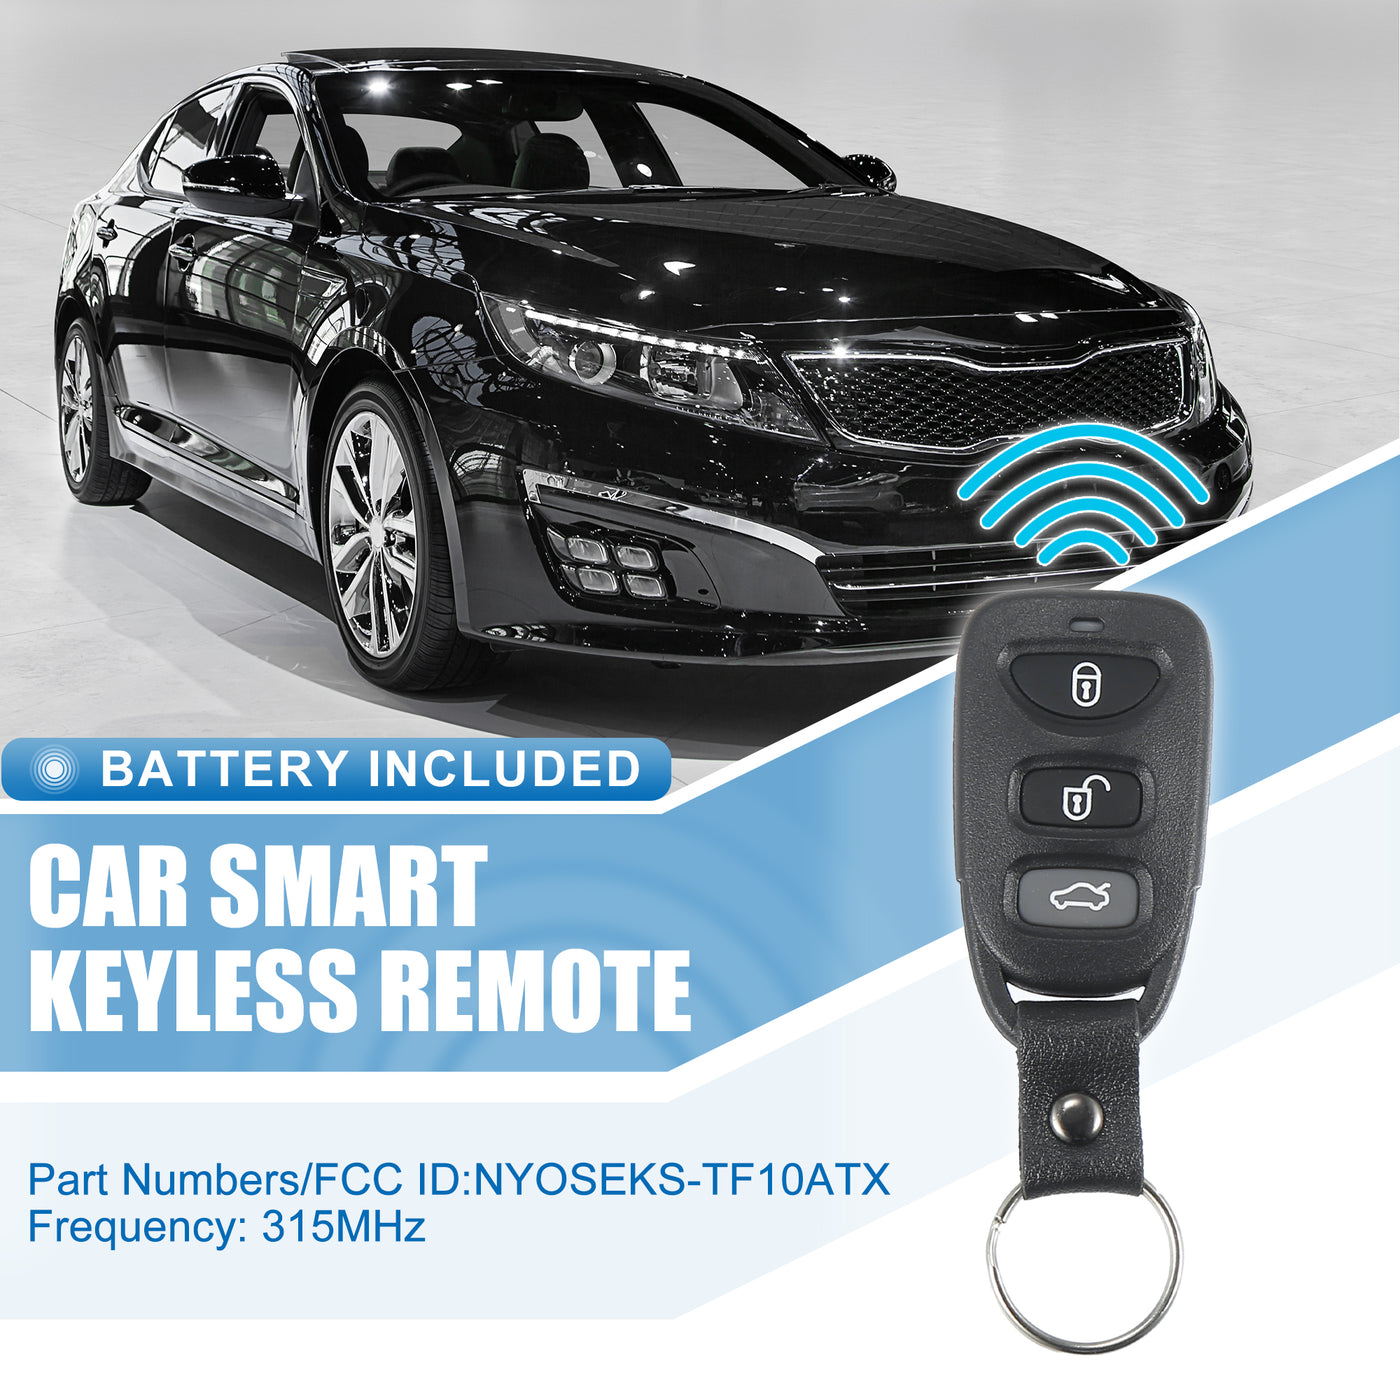 X AUTOHAUX 4 Button Car Keyless Entry Remote Control Key Fob Proximity Smart Fob NYOSEKS-TF10ATX for Kia Optima 2011-2013 315MHz